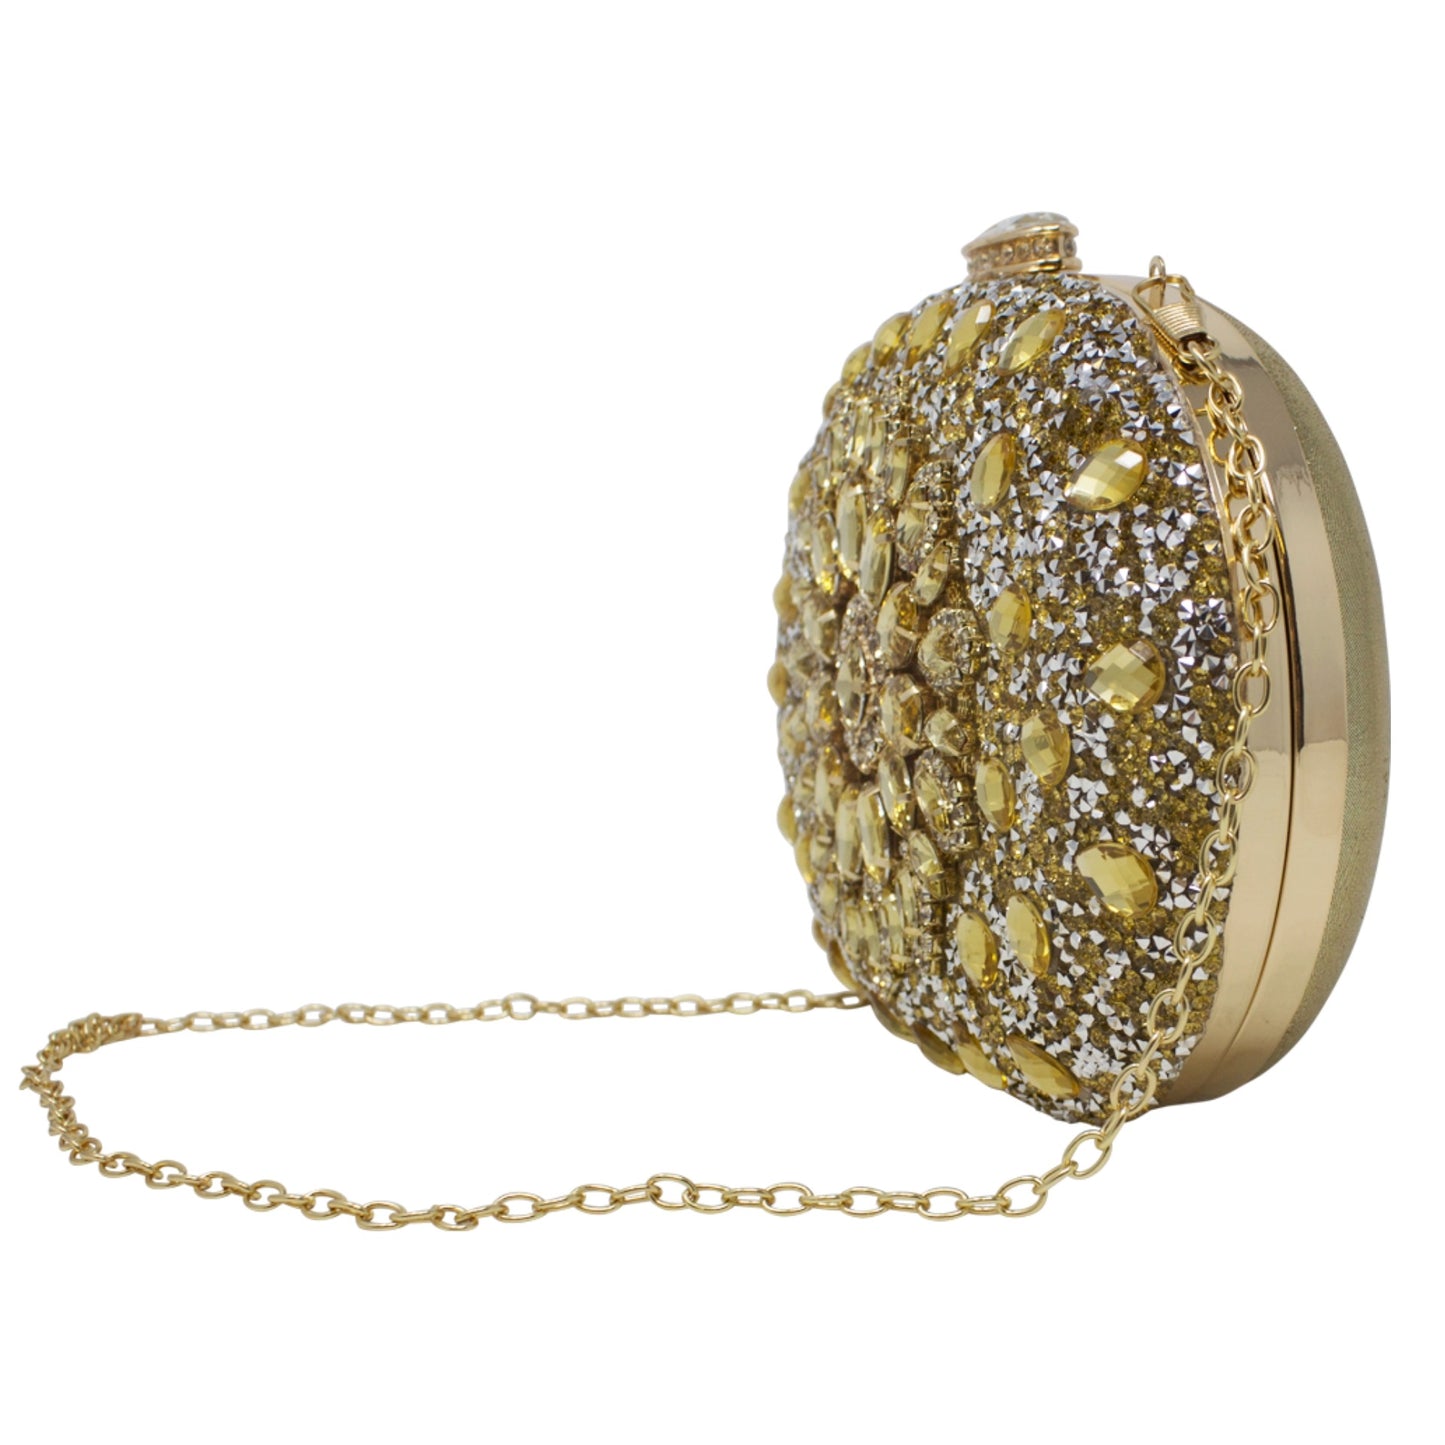 Sparkly Gold Diamante Encrusted Clutch Bag